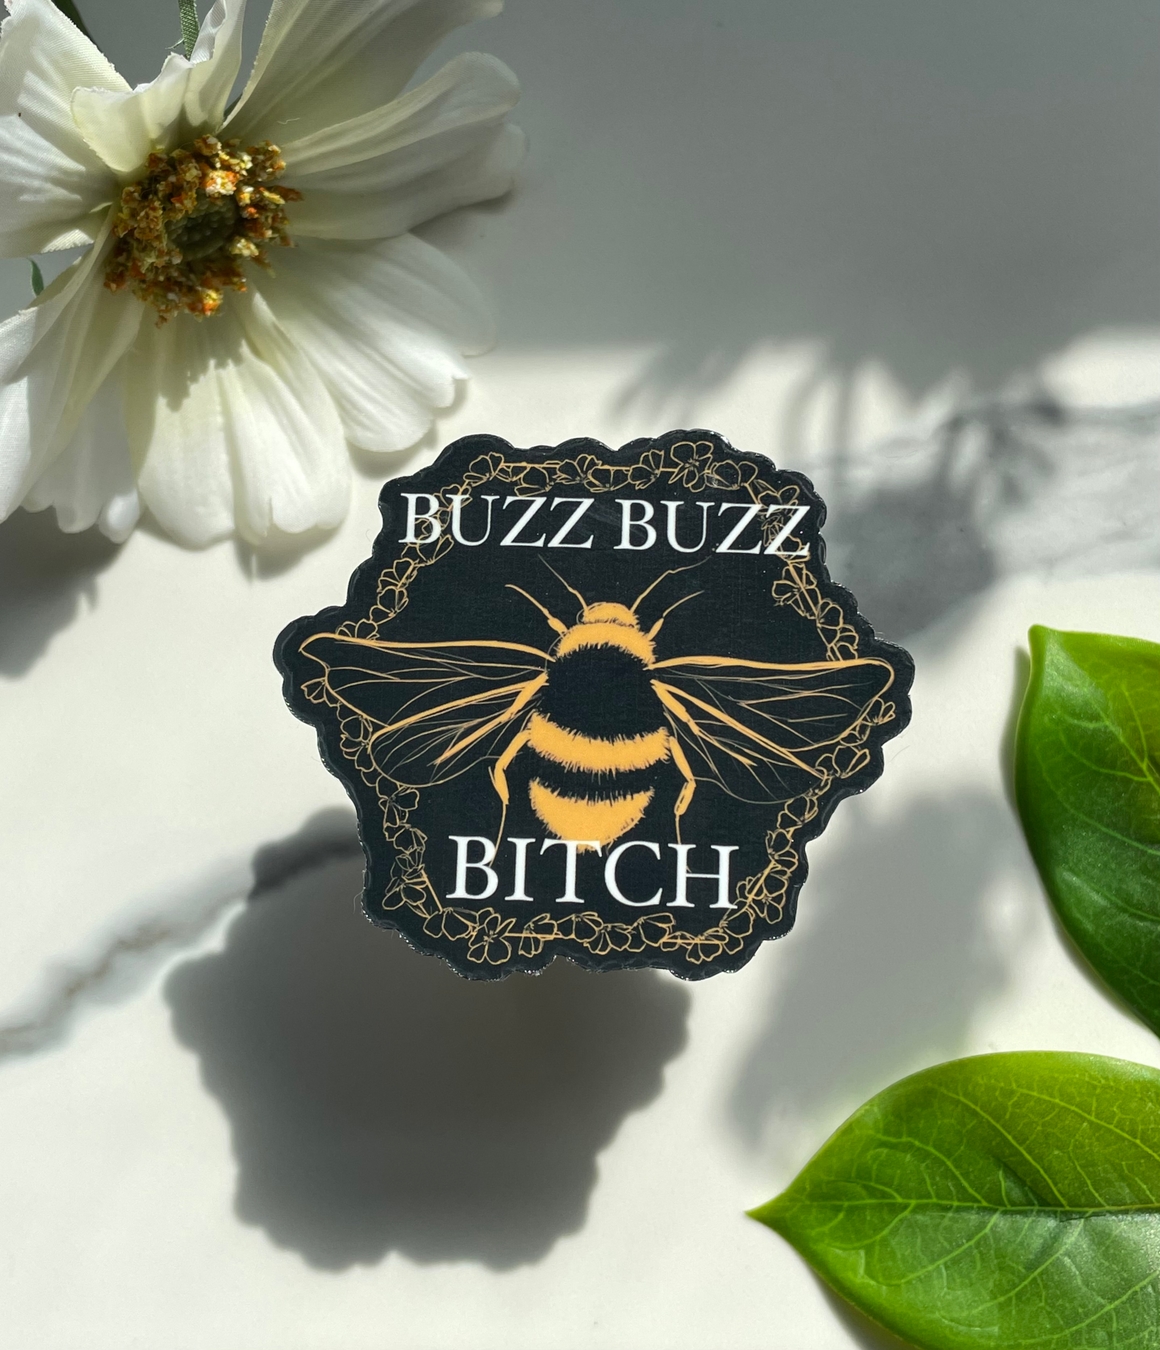 A Dresser Drawer Buzz Buzz Bitch Sticker